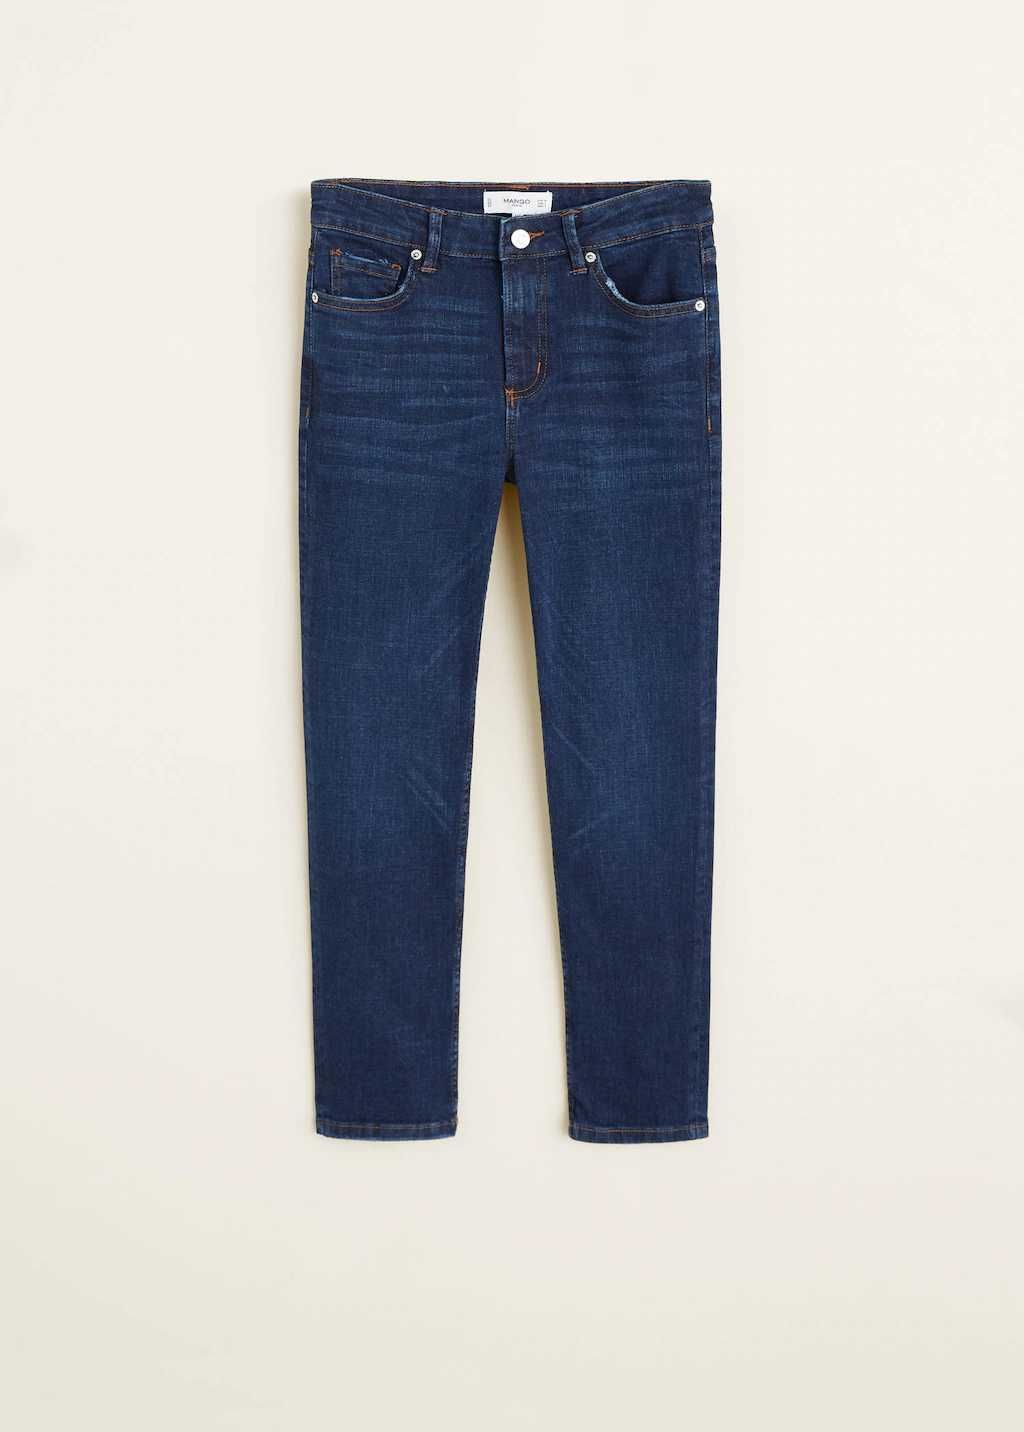 Джинсы Mango, slim cropped jeans